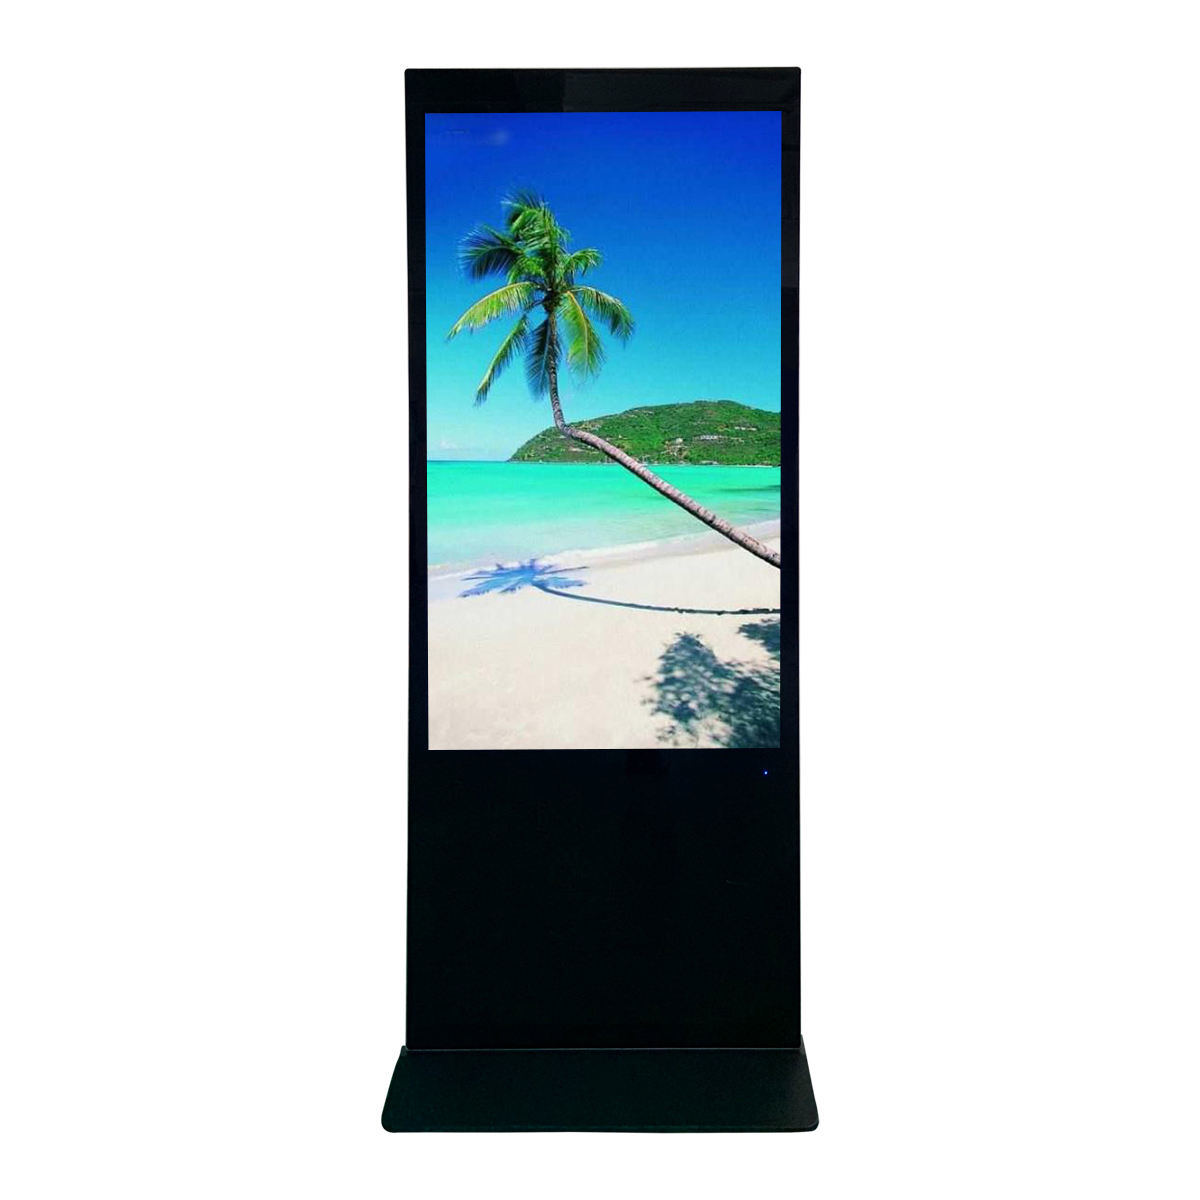 Indoor Portable LCD Display